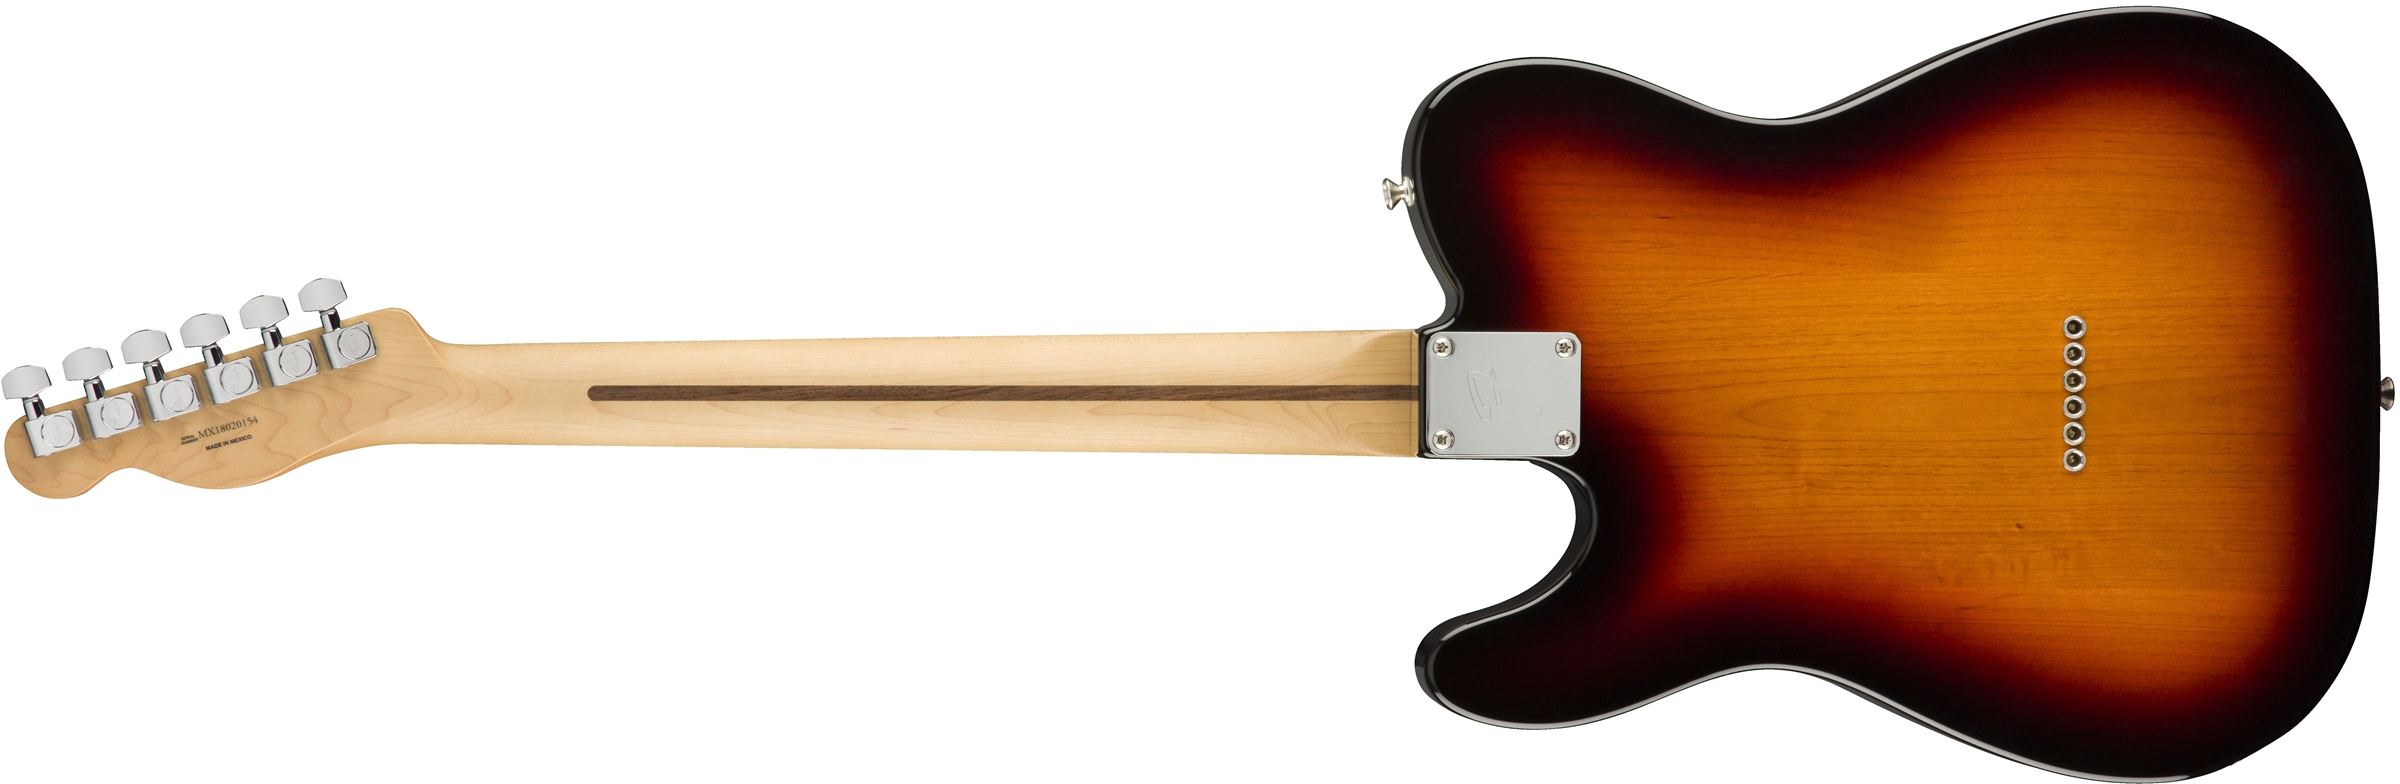 Fender Tele Player Mex Ss Pf - 3-color Sunburst - Tel shape electric guitar - Variation 1